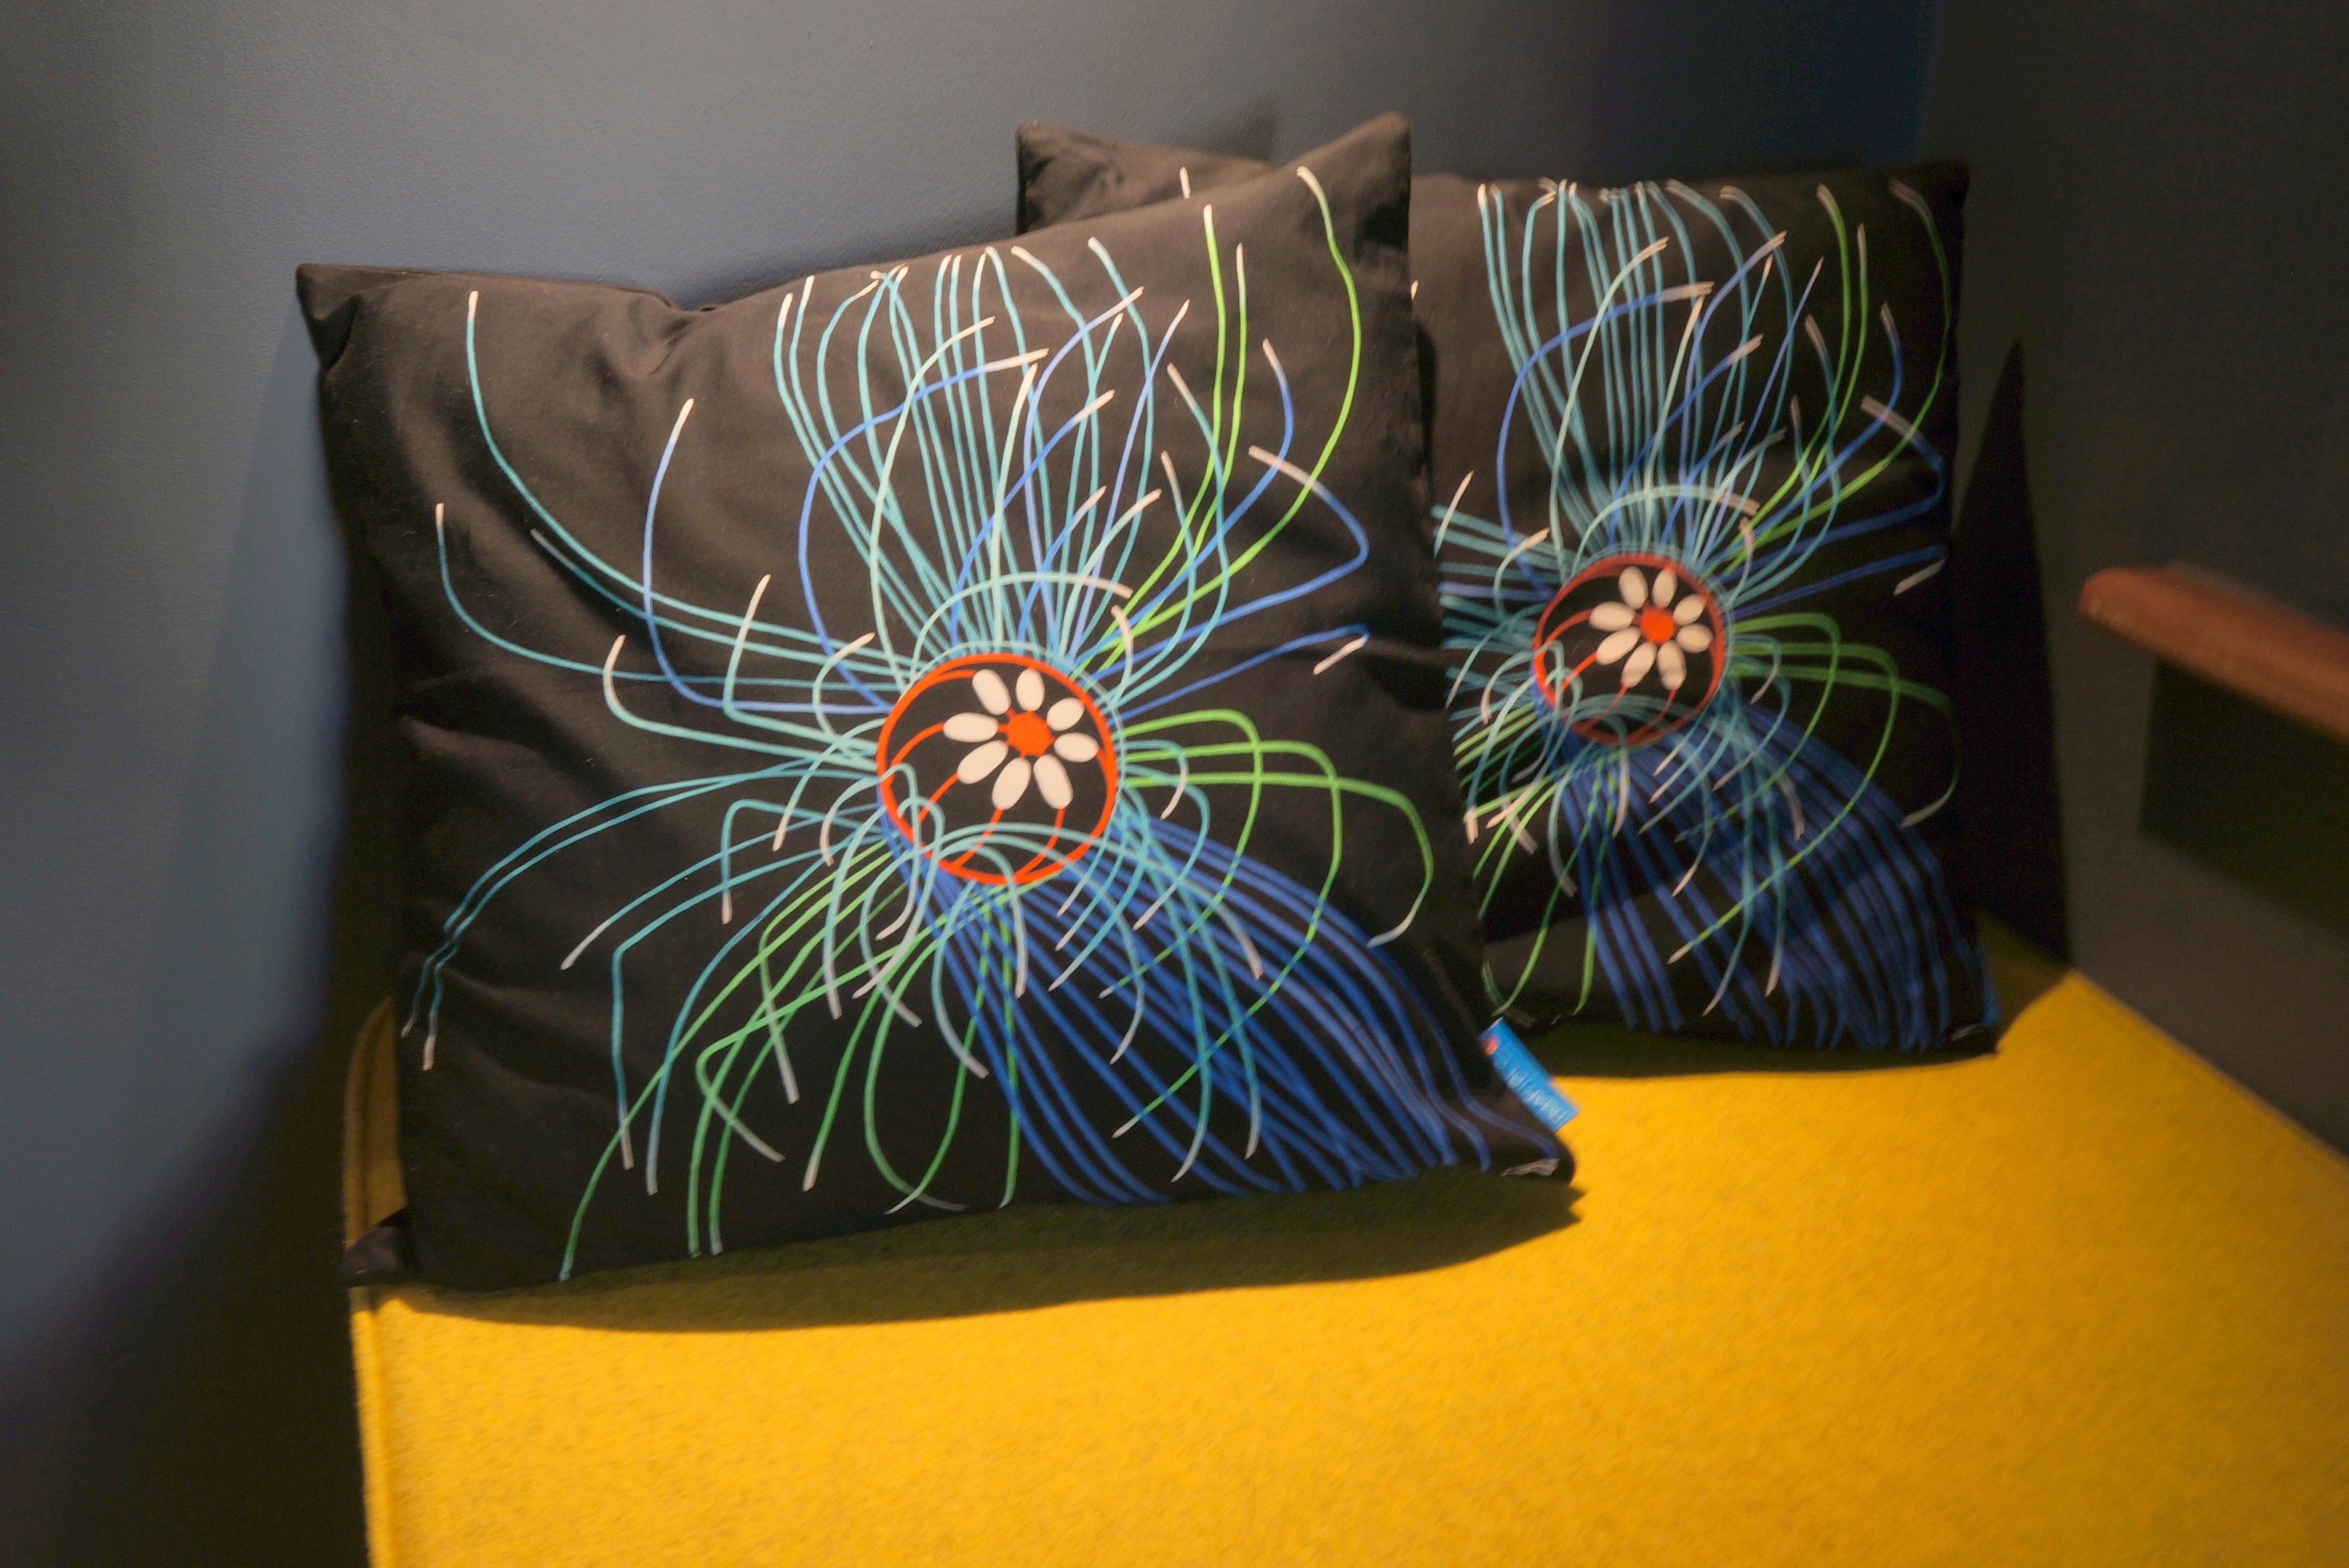 Luxury Cushion Cover - Ultraviolet Jellyfish Art Print  Smart Deco Homeware Lighting and Art by Jacqueline hammond